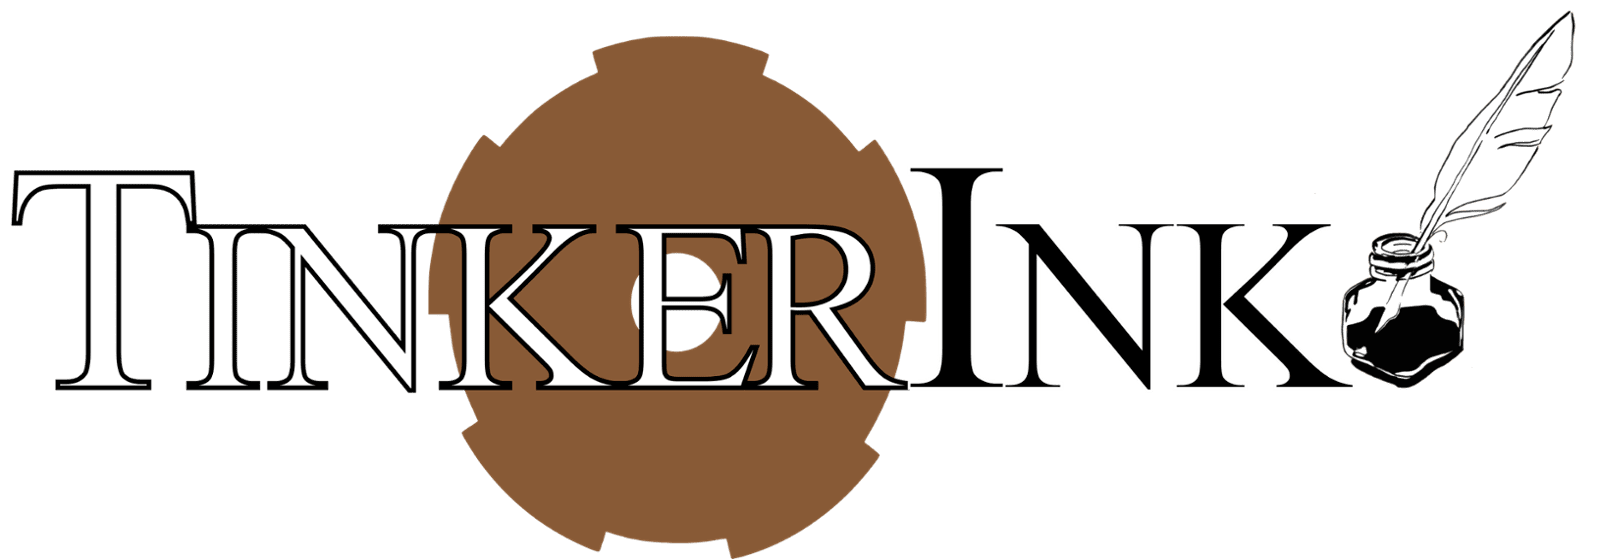 TinkerInk logo